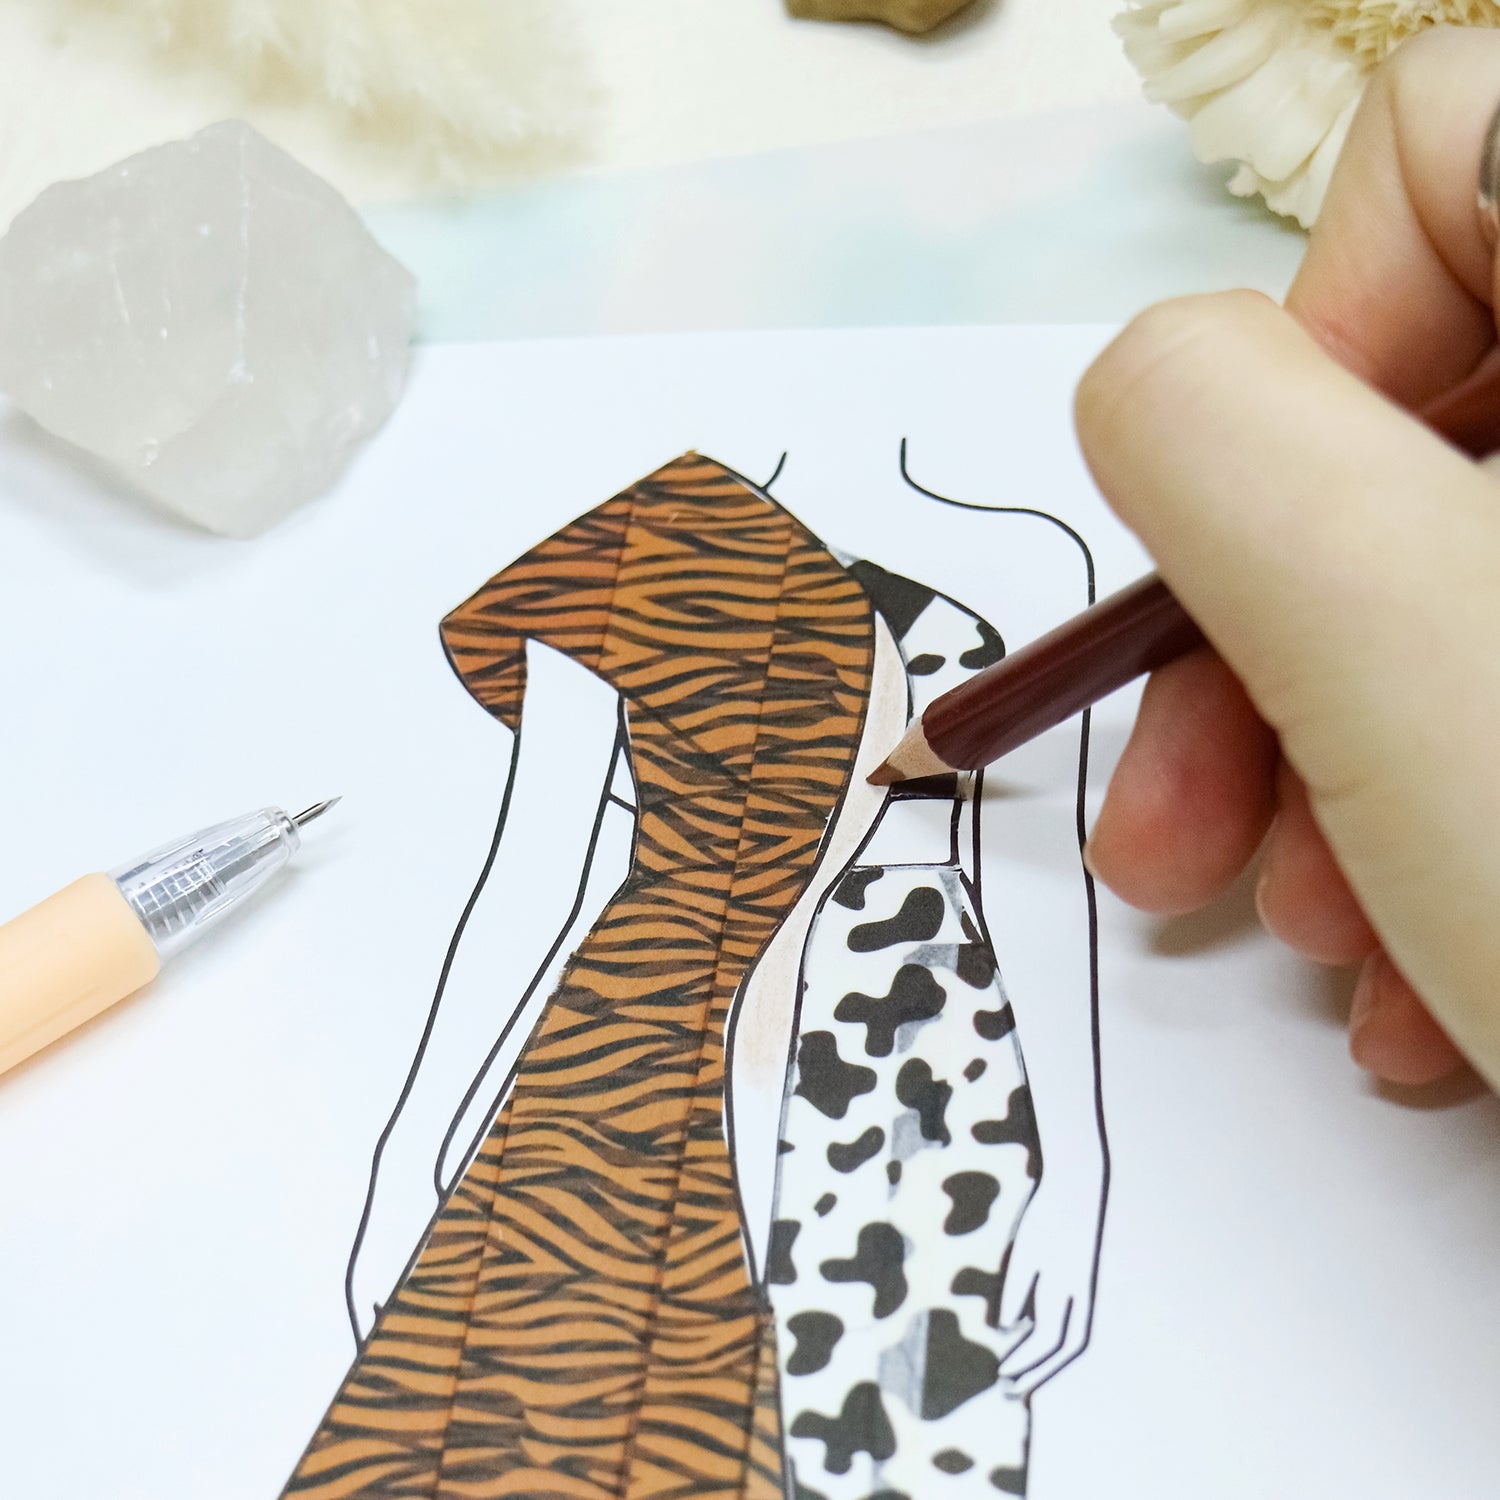 DIY Tape Clothing Design Sketchbook-for Beginners In Fashion Design